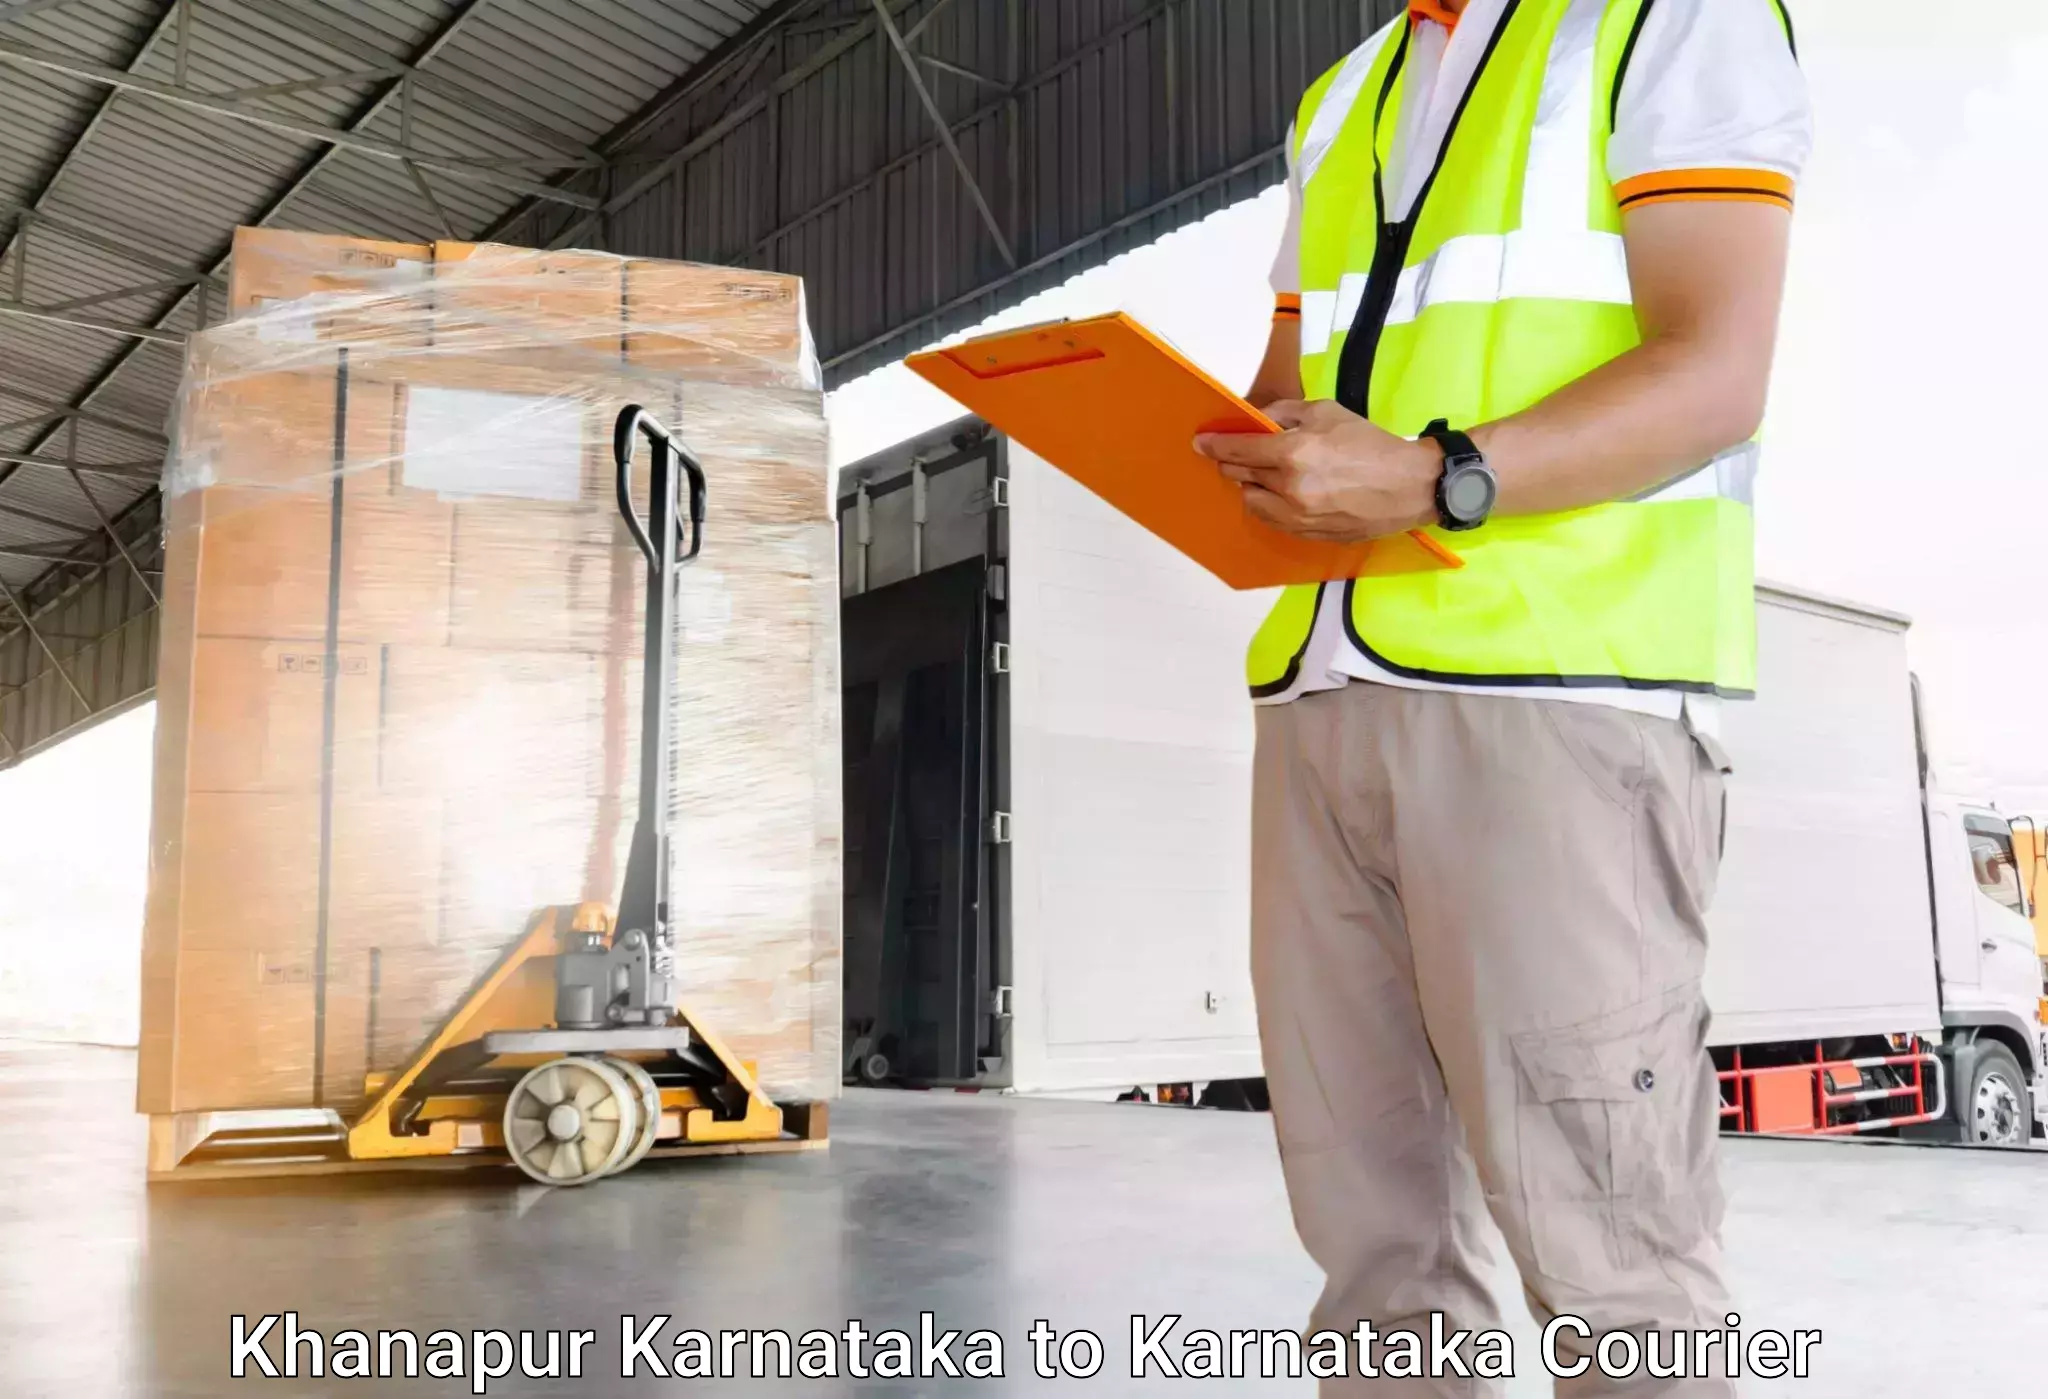 Luggage delivery network Khanapur Karnataka to Pedapudi